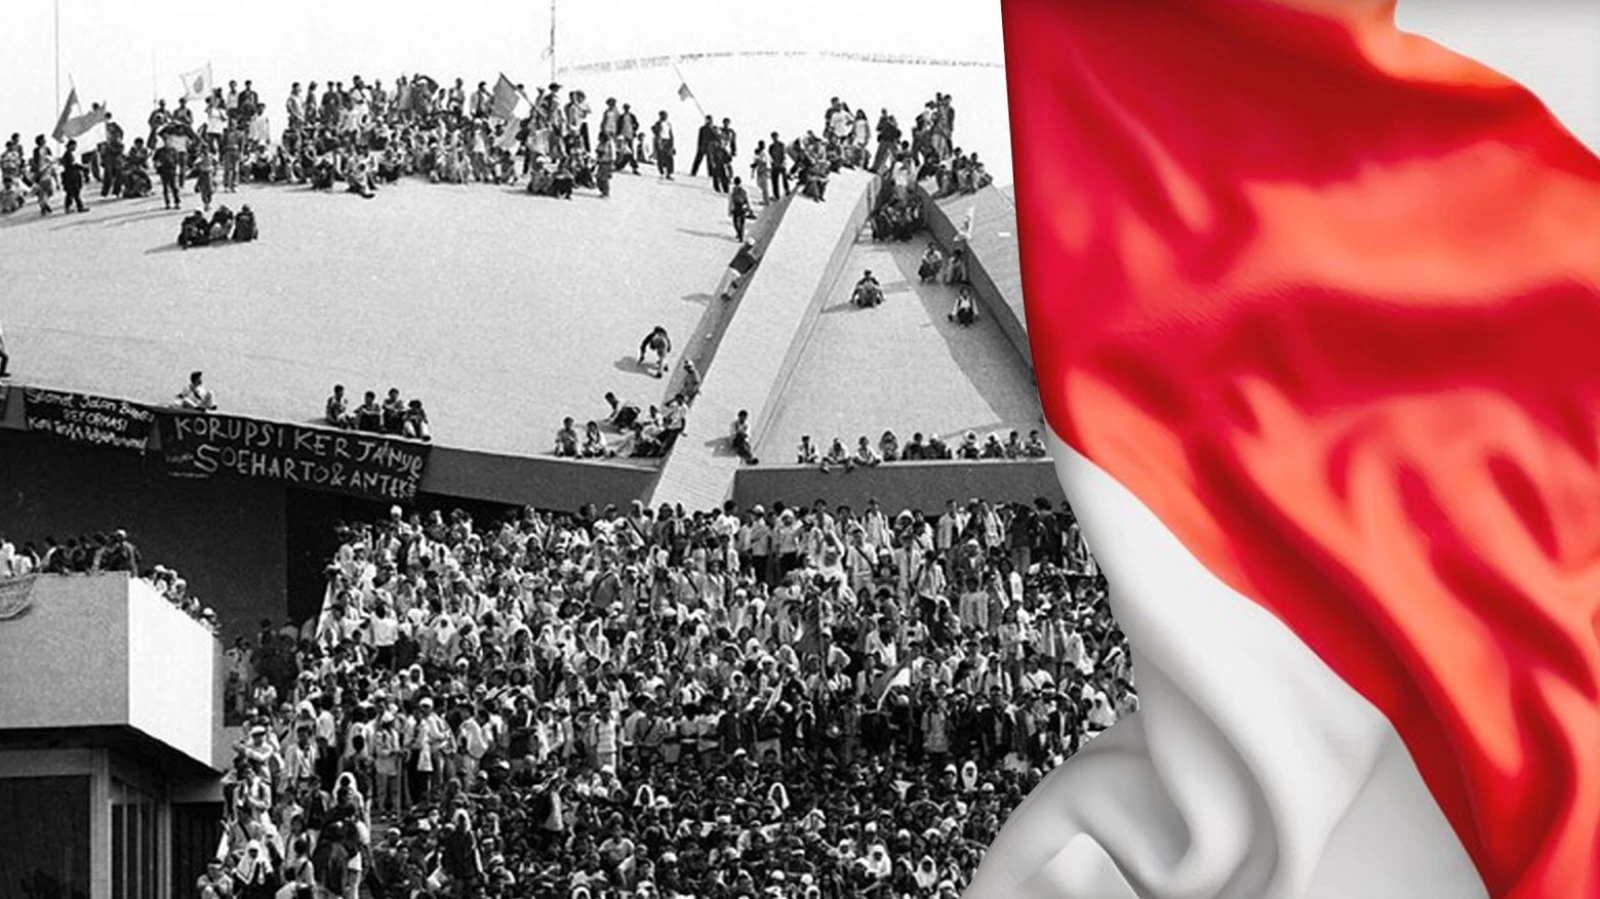 Selamatkan Indonesia dari Kepentingan dan Ambisi Kekuasaan Jokowi, Keluarga, serta Kroni-kroninya: Kembalikan Indonesia untuk Kepentingan Rakyat Seluruhnya